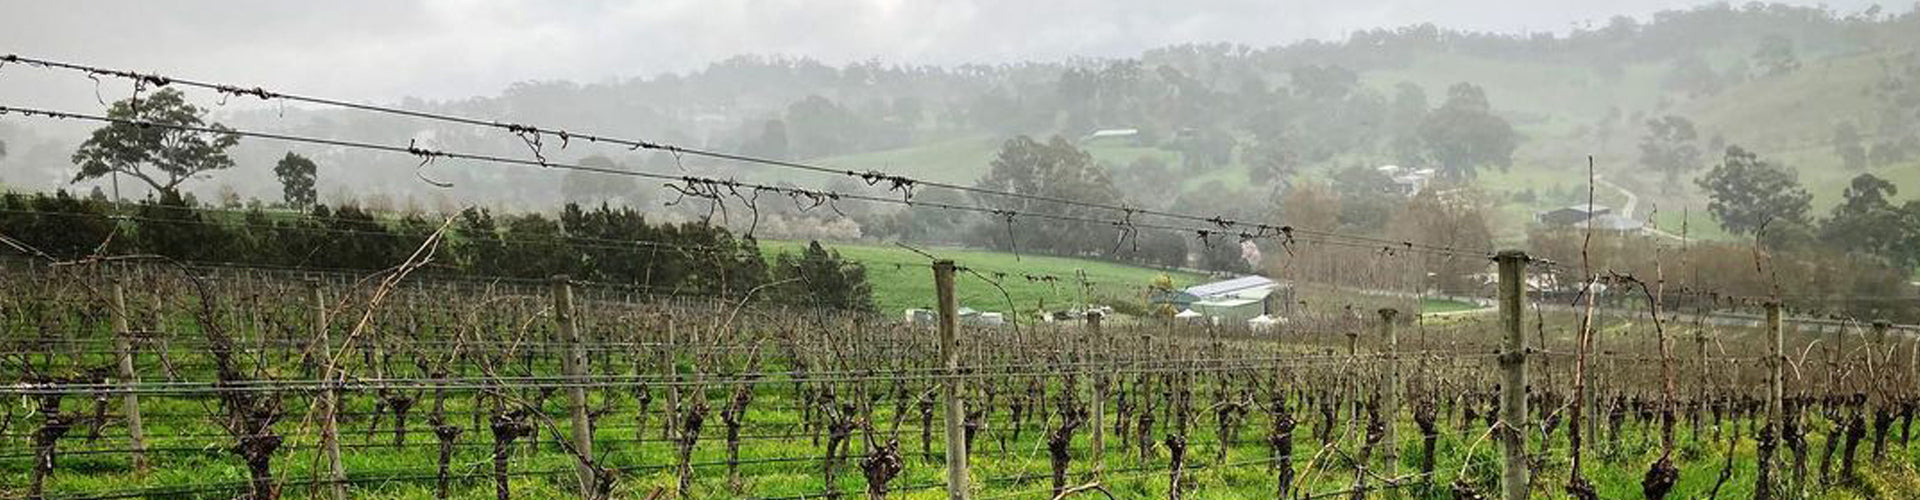 The Protero Vineyard in Australia's Adelaide Hills Wine Region